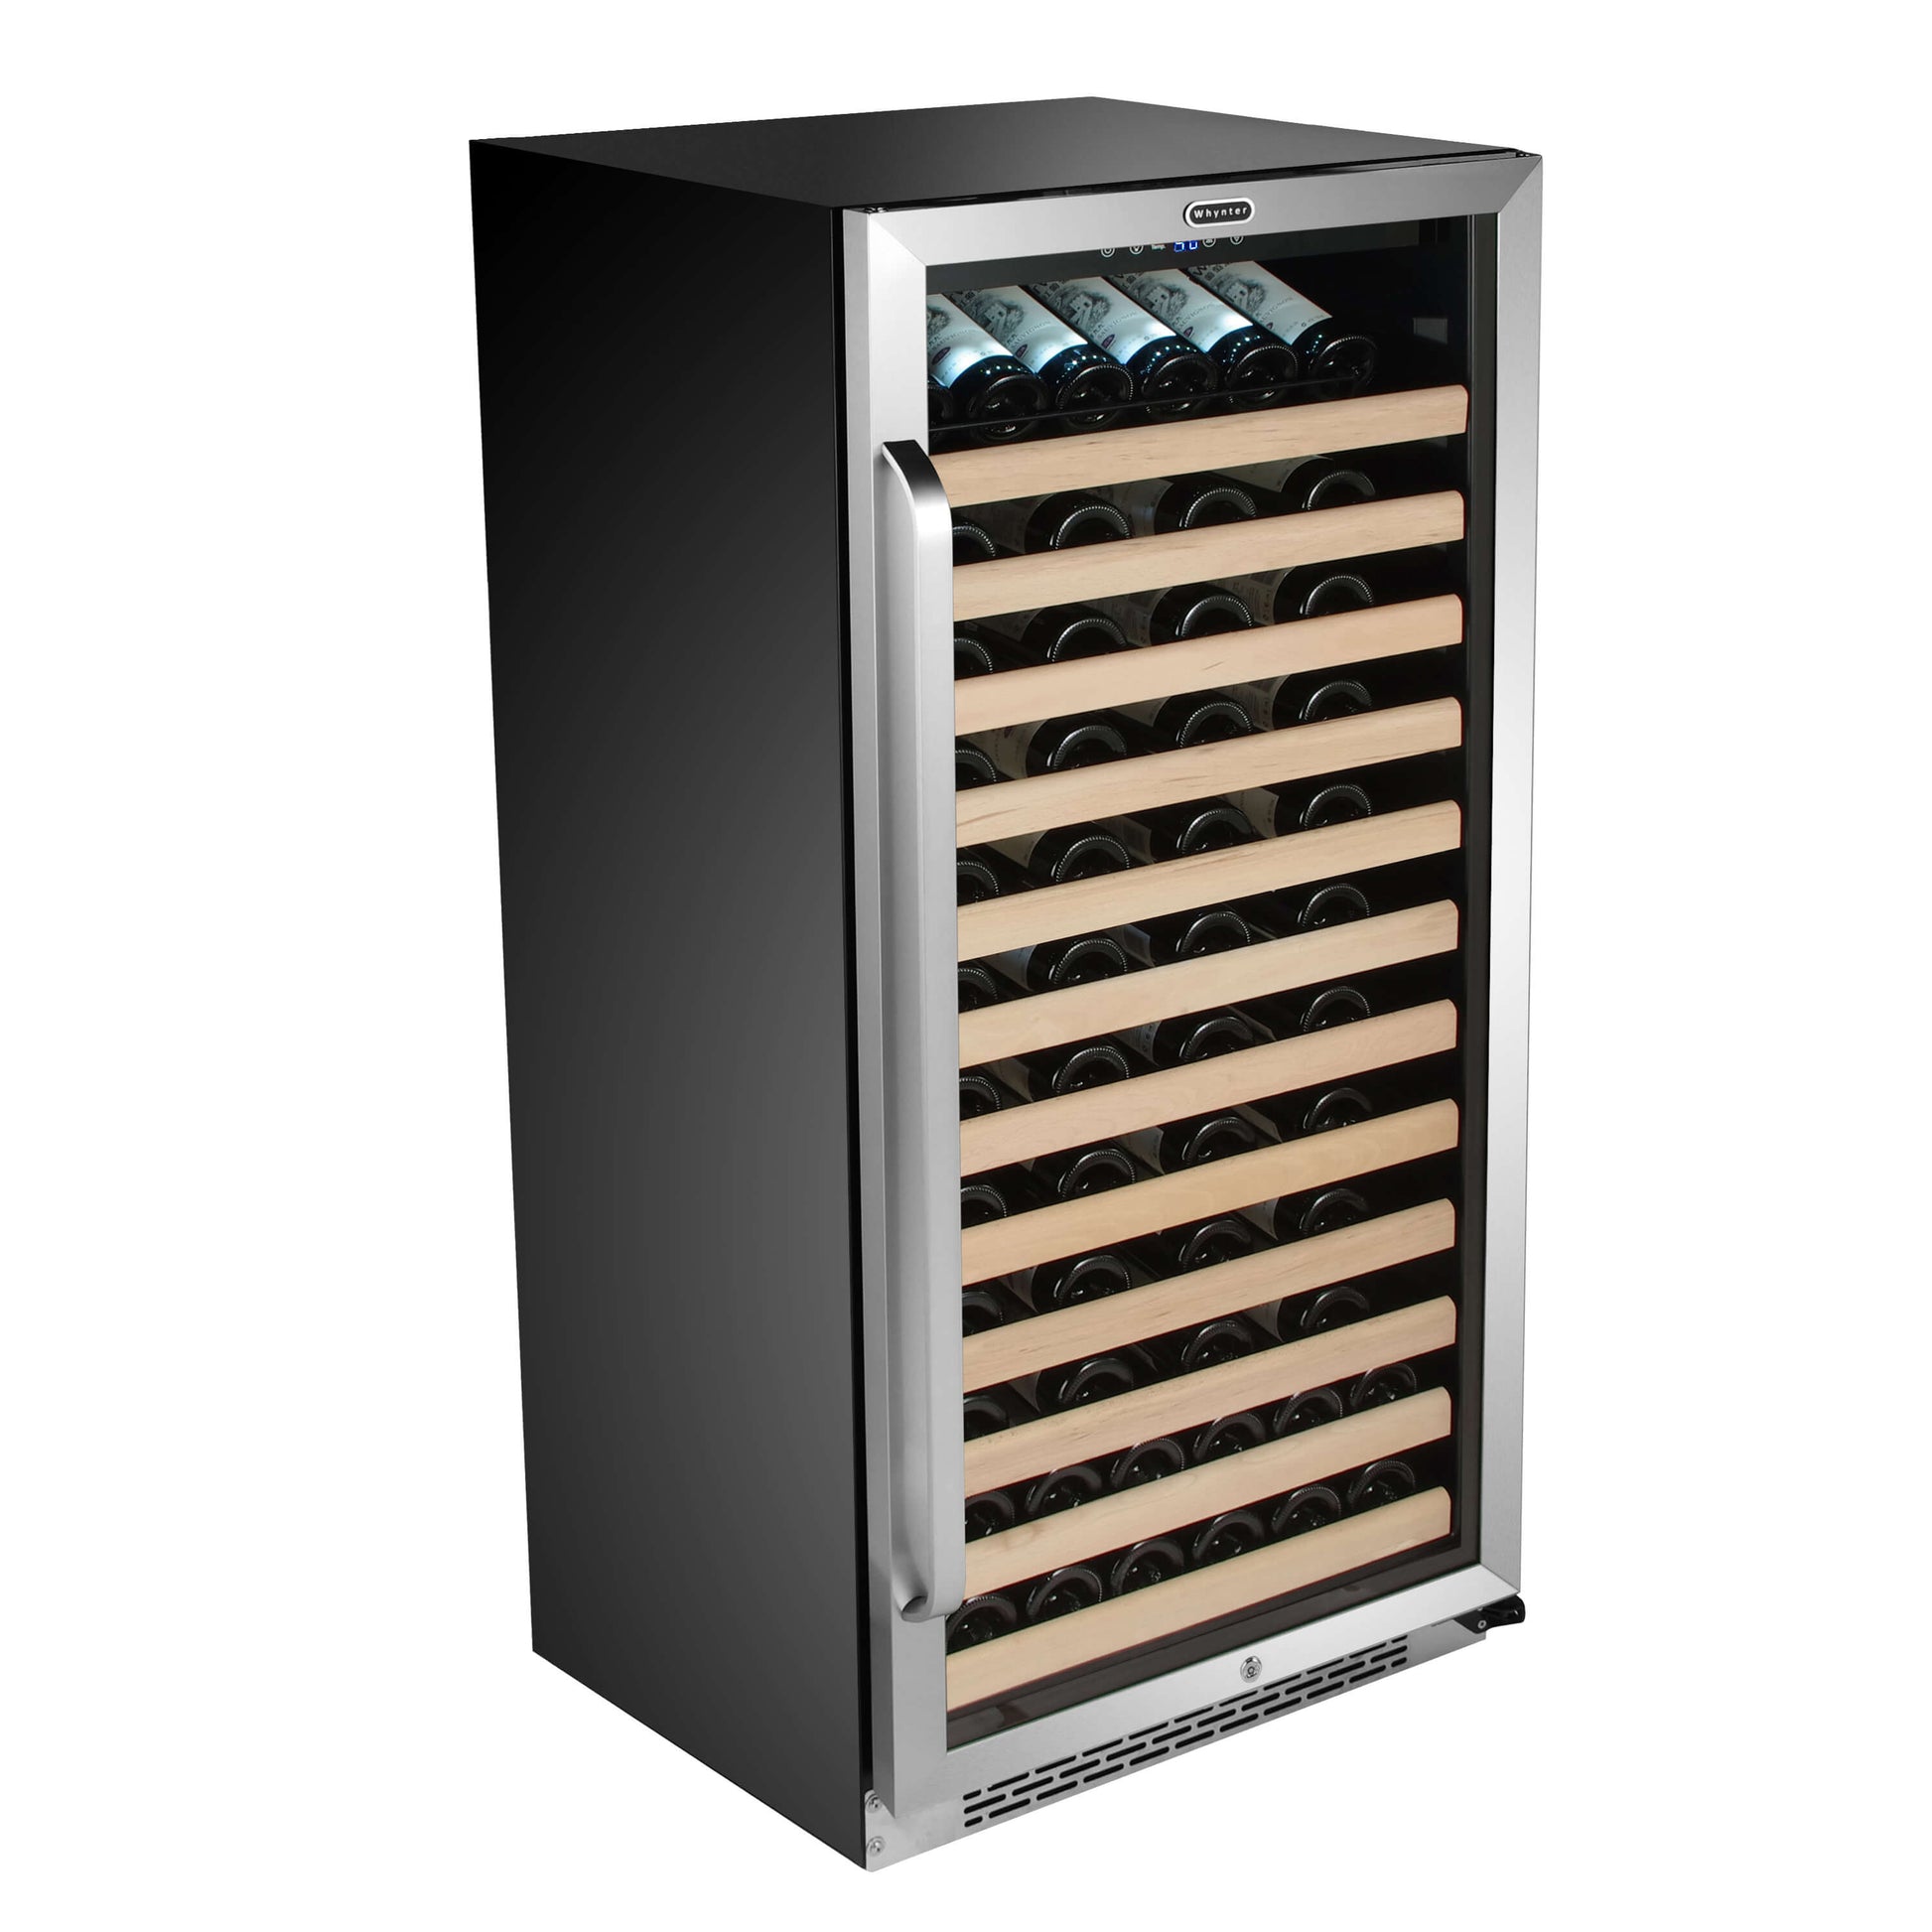 Whynter Wine Refrigerator Whynter BWR-1002SD/BWR-1002SDa 100 Bottle Built-in Stainless Steel Compressor Wine Refrigerator with Display Rack and LED display